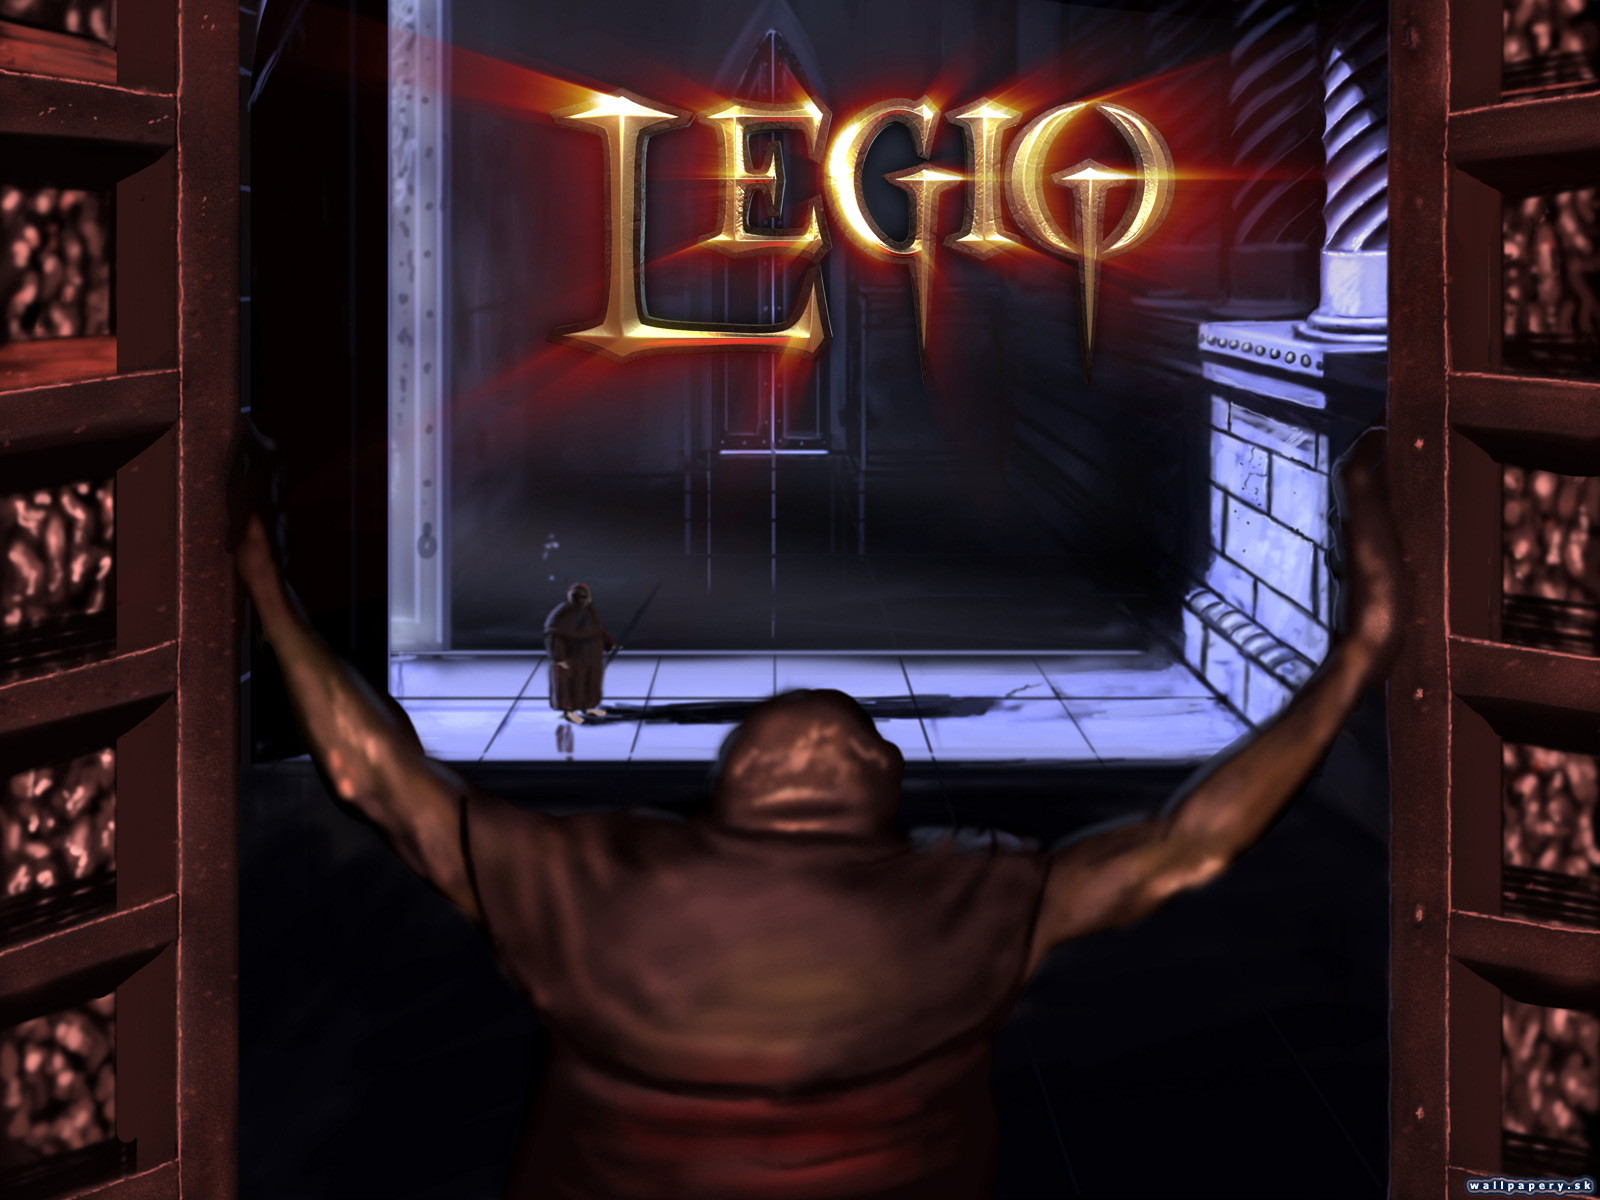 Legio - wallpaper 6